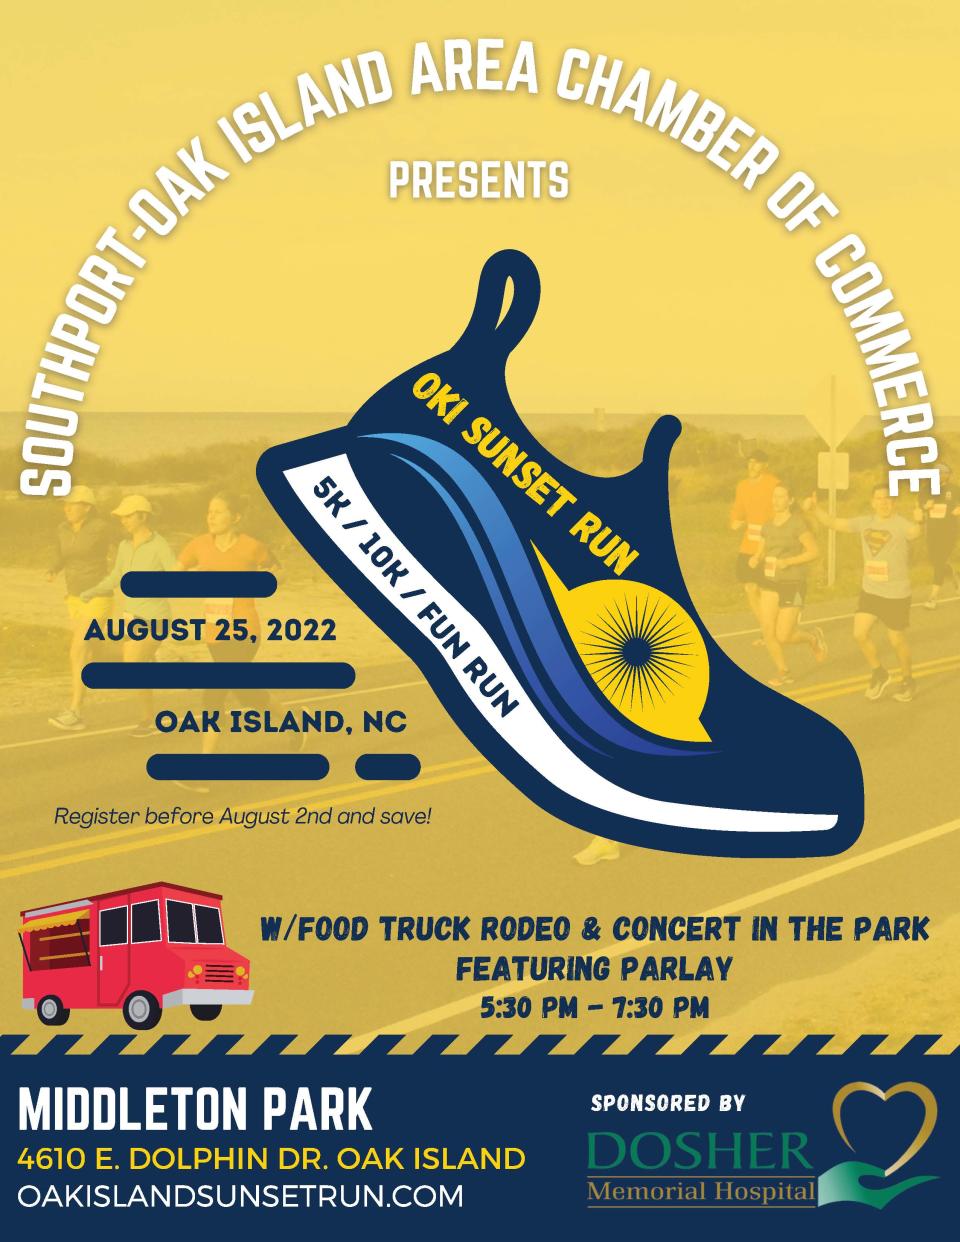 Oak Island Sunset Run/Walk will be held Aug. 25 at Middleton Park, Oak Island.